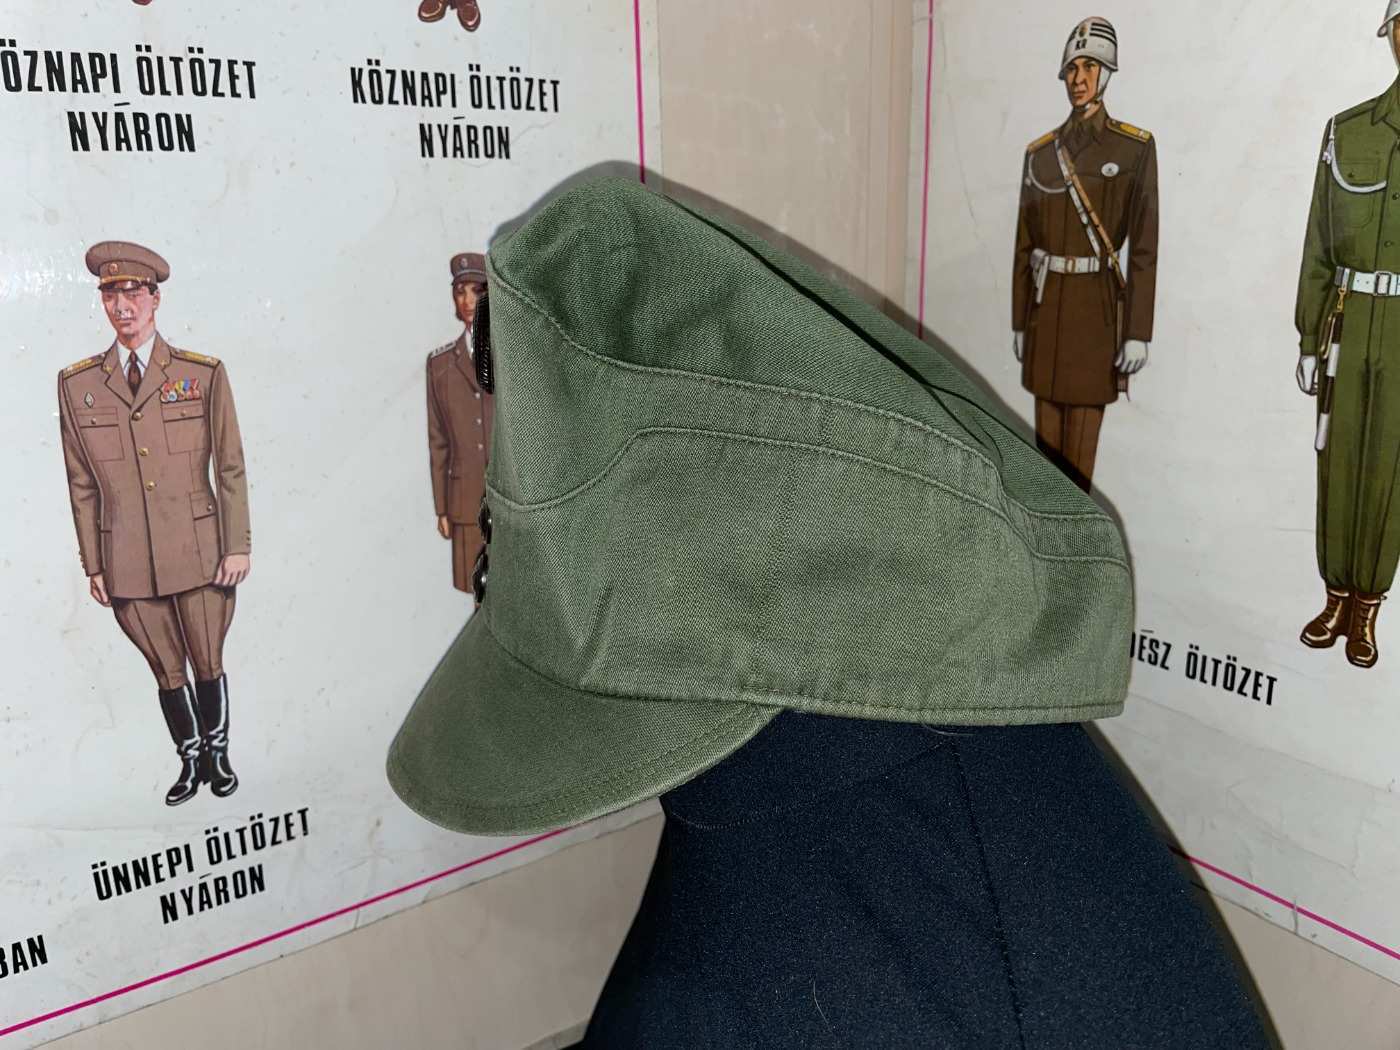 magyar katonai gyakorló ruha